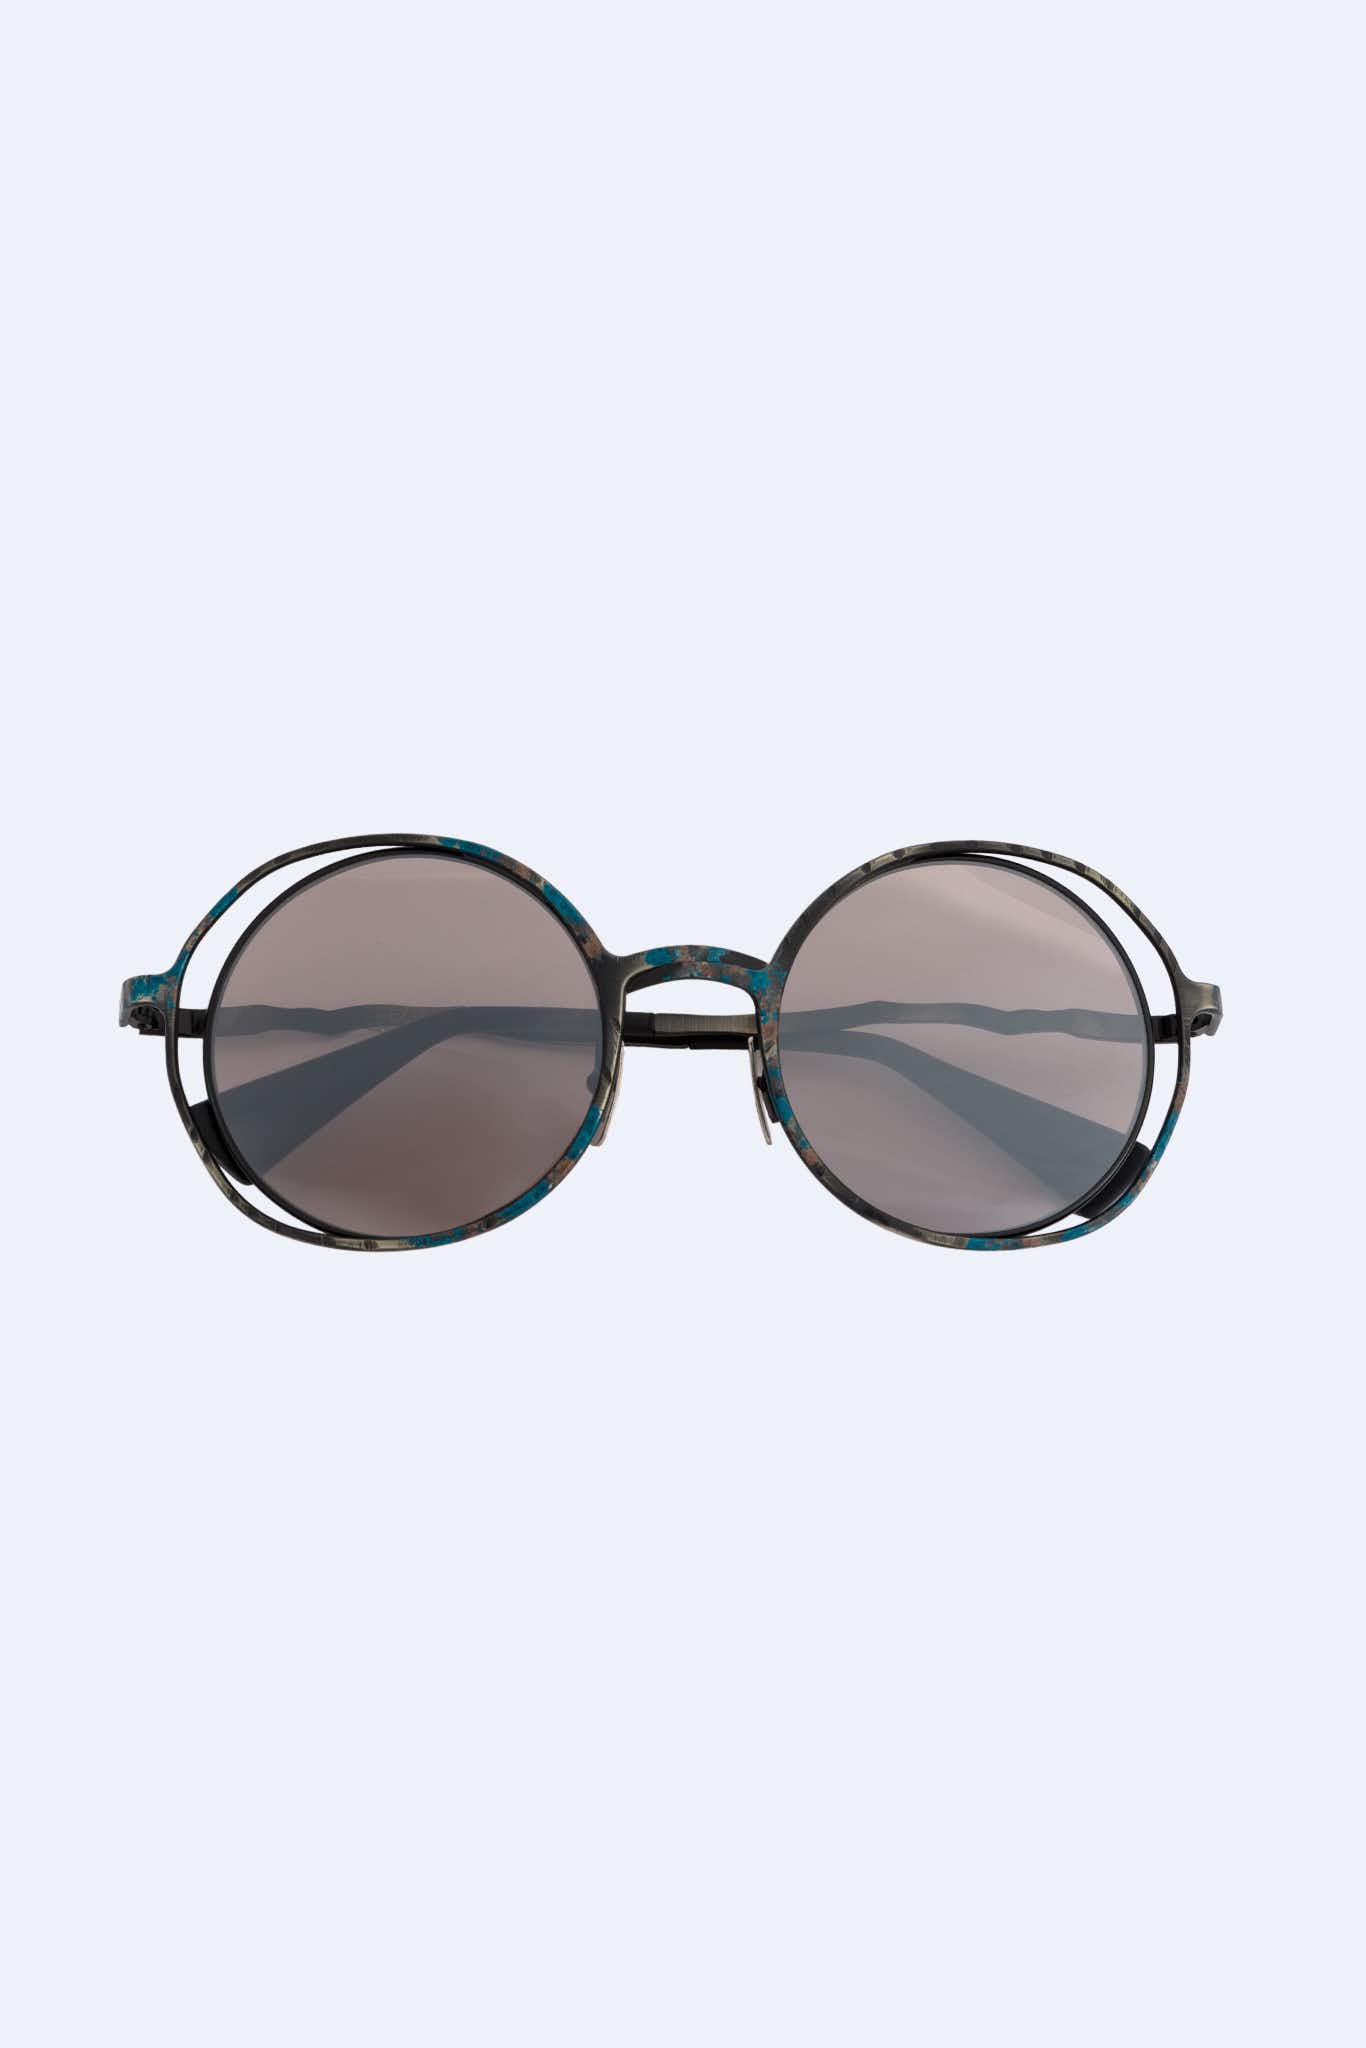 1366x2048 Sunglasses - Glass Reflection PNG